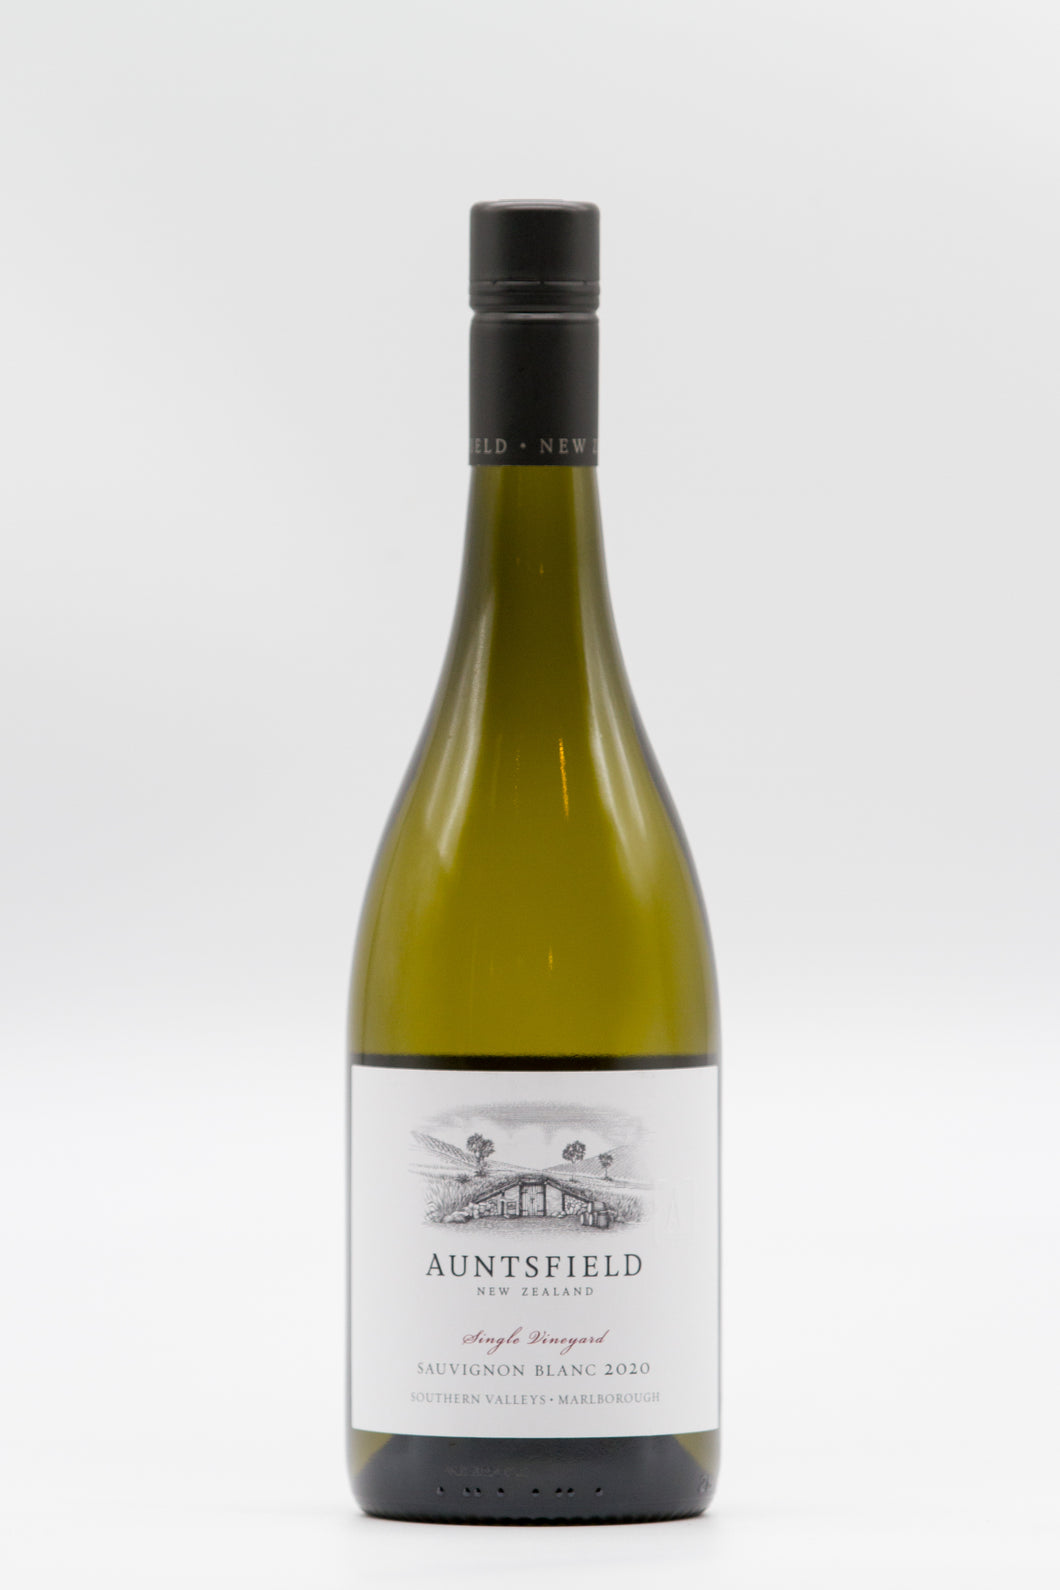 Photo of a bottle of Auntsfield Marlborough Sauvignon Blanc 2020